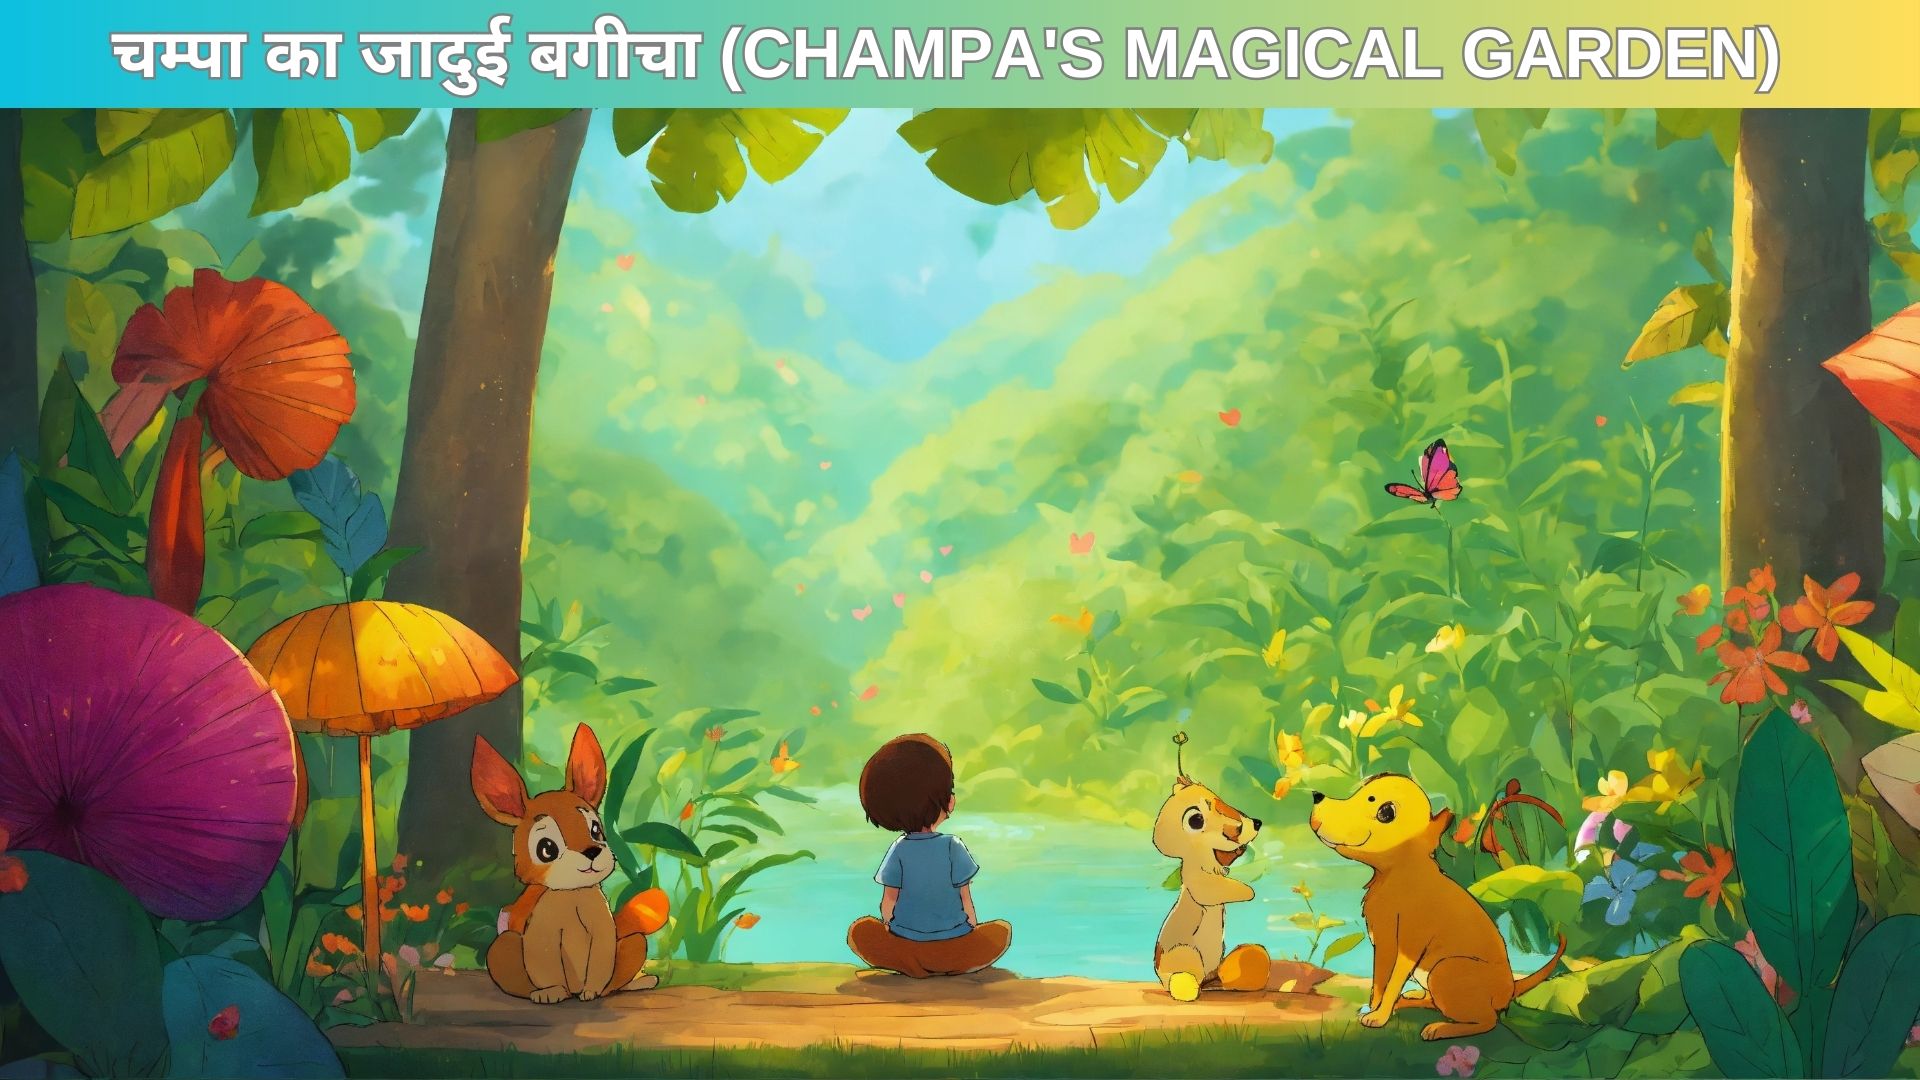 Champa's Magical Garden